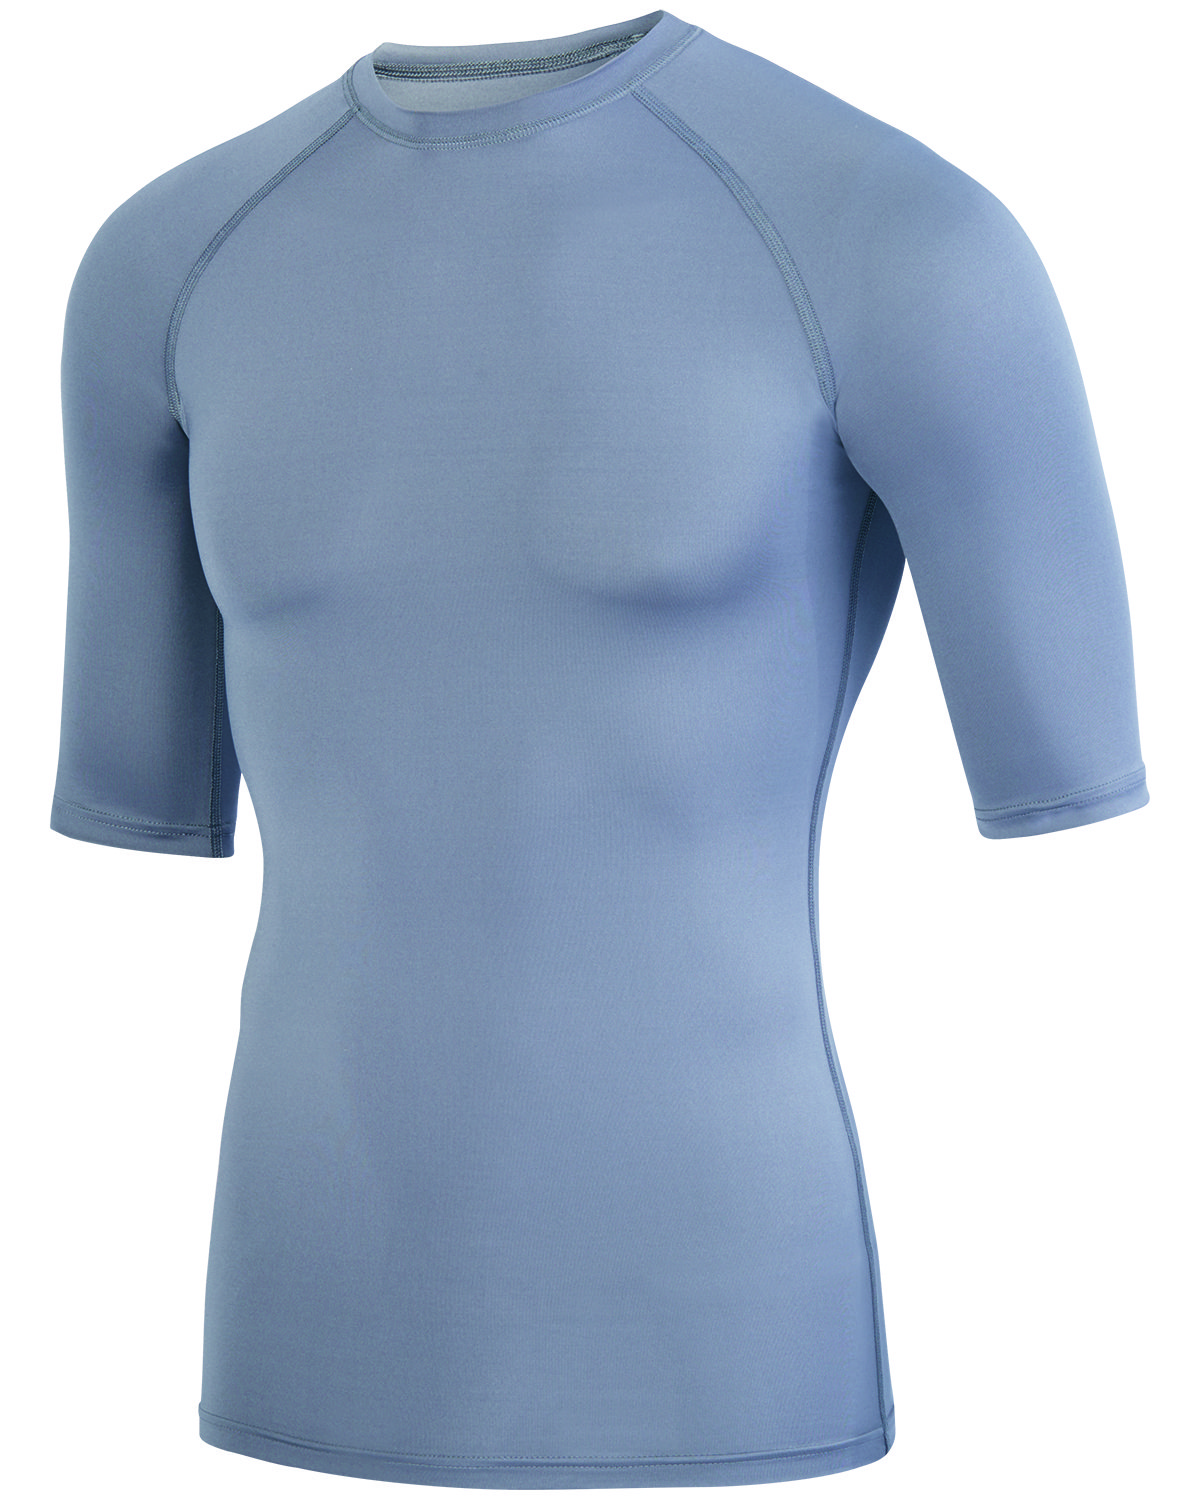 Augusta Hyperform Short Sleeve Compression Shirt ― item# 297343